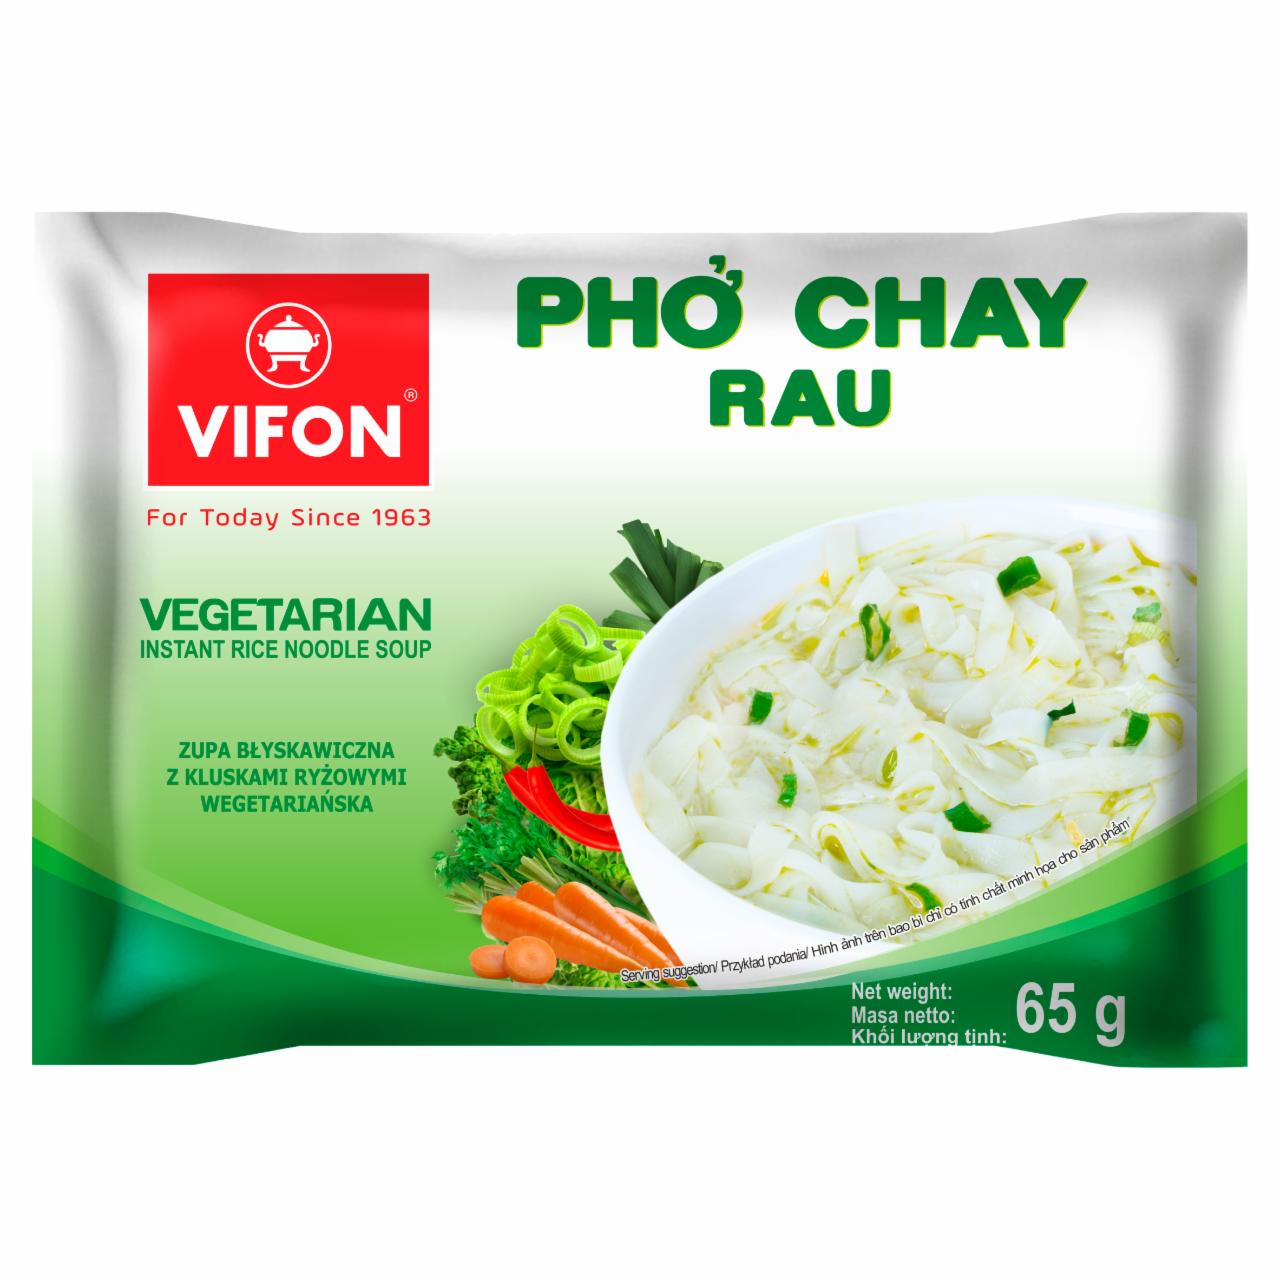 Zdjęcia - Vifon Wietnamska zupa Pho Chay Rau wegetariańska 65 g